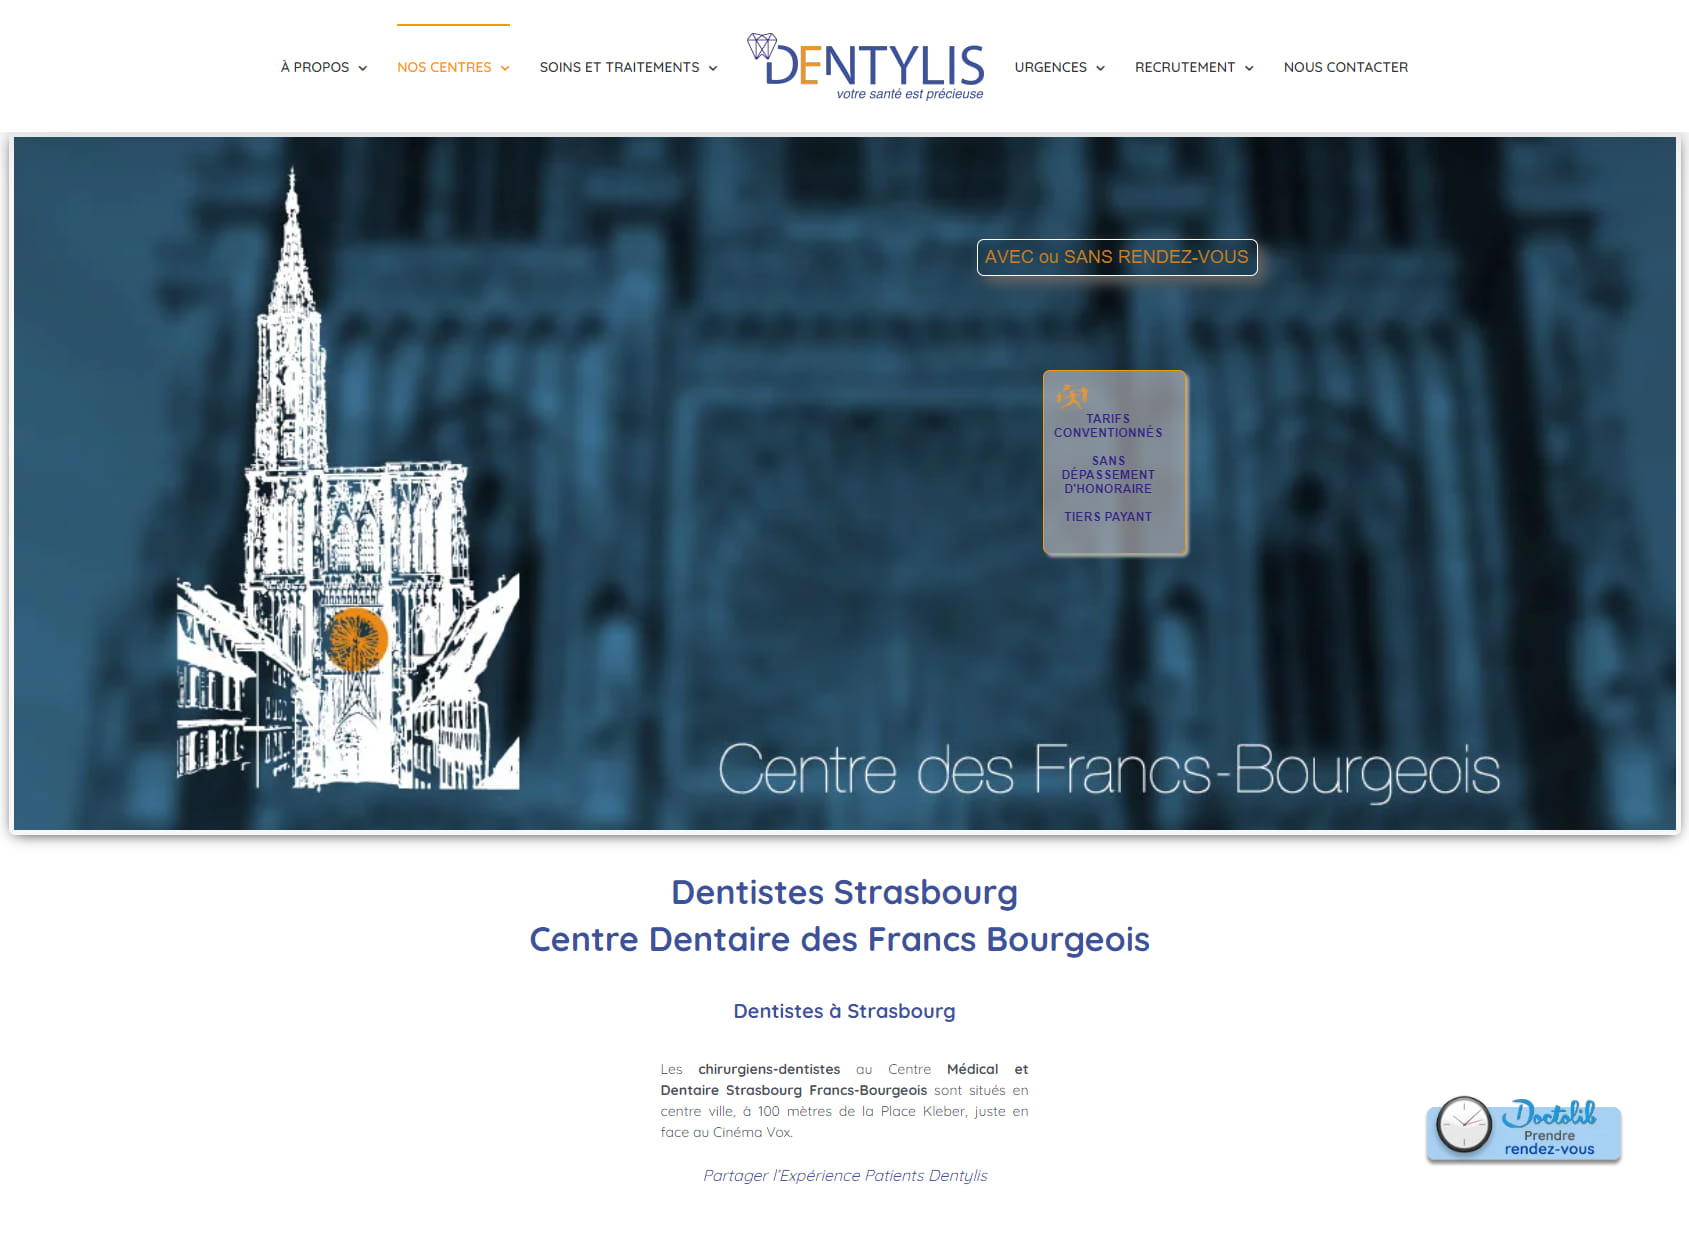 Centre dentaire et Ophtalmologie Strasbourg Francs Bourgeois - Dentylis